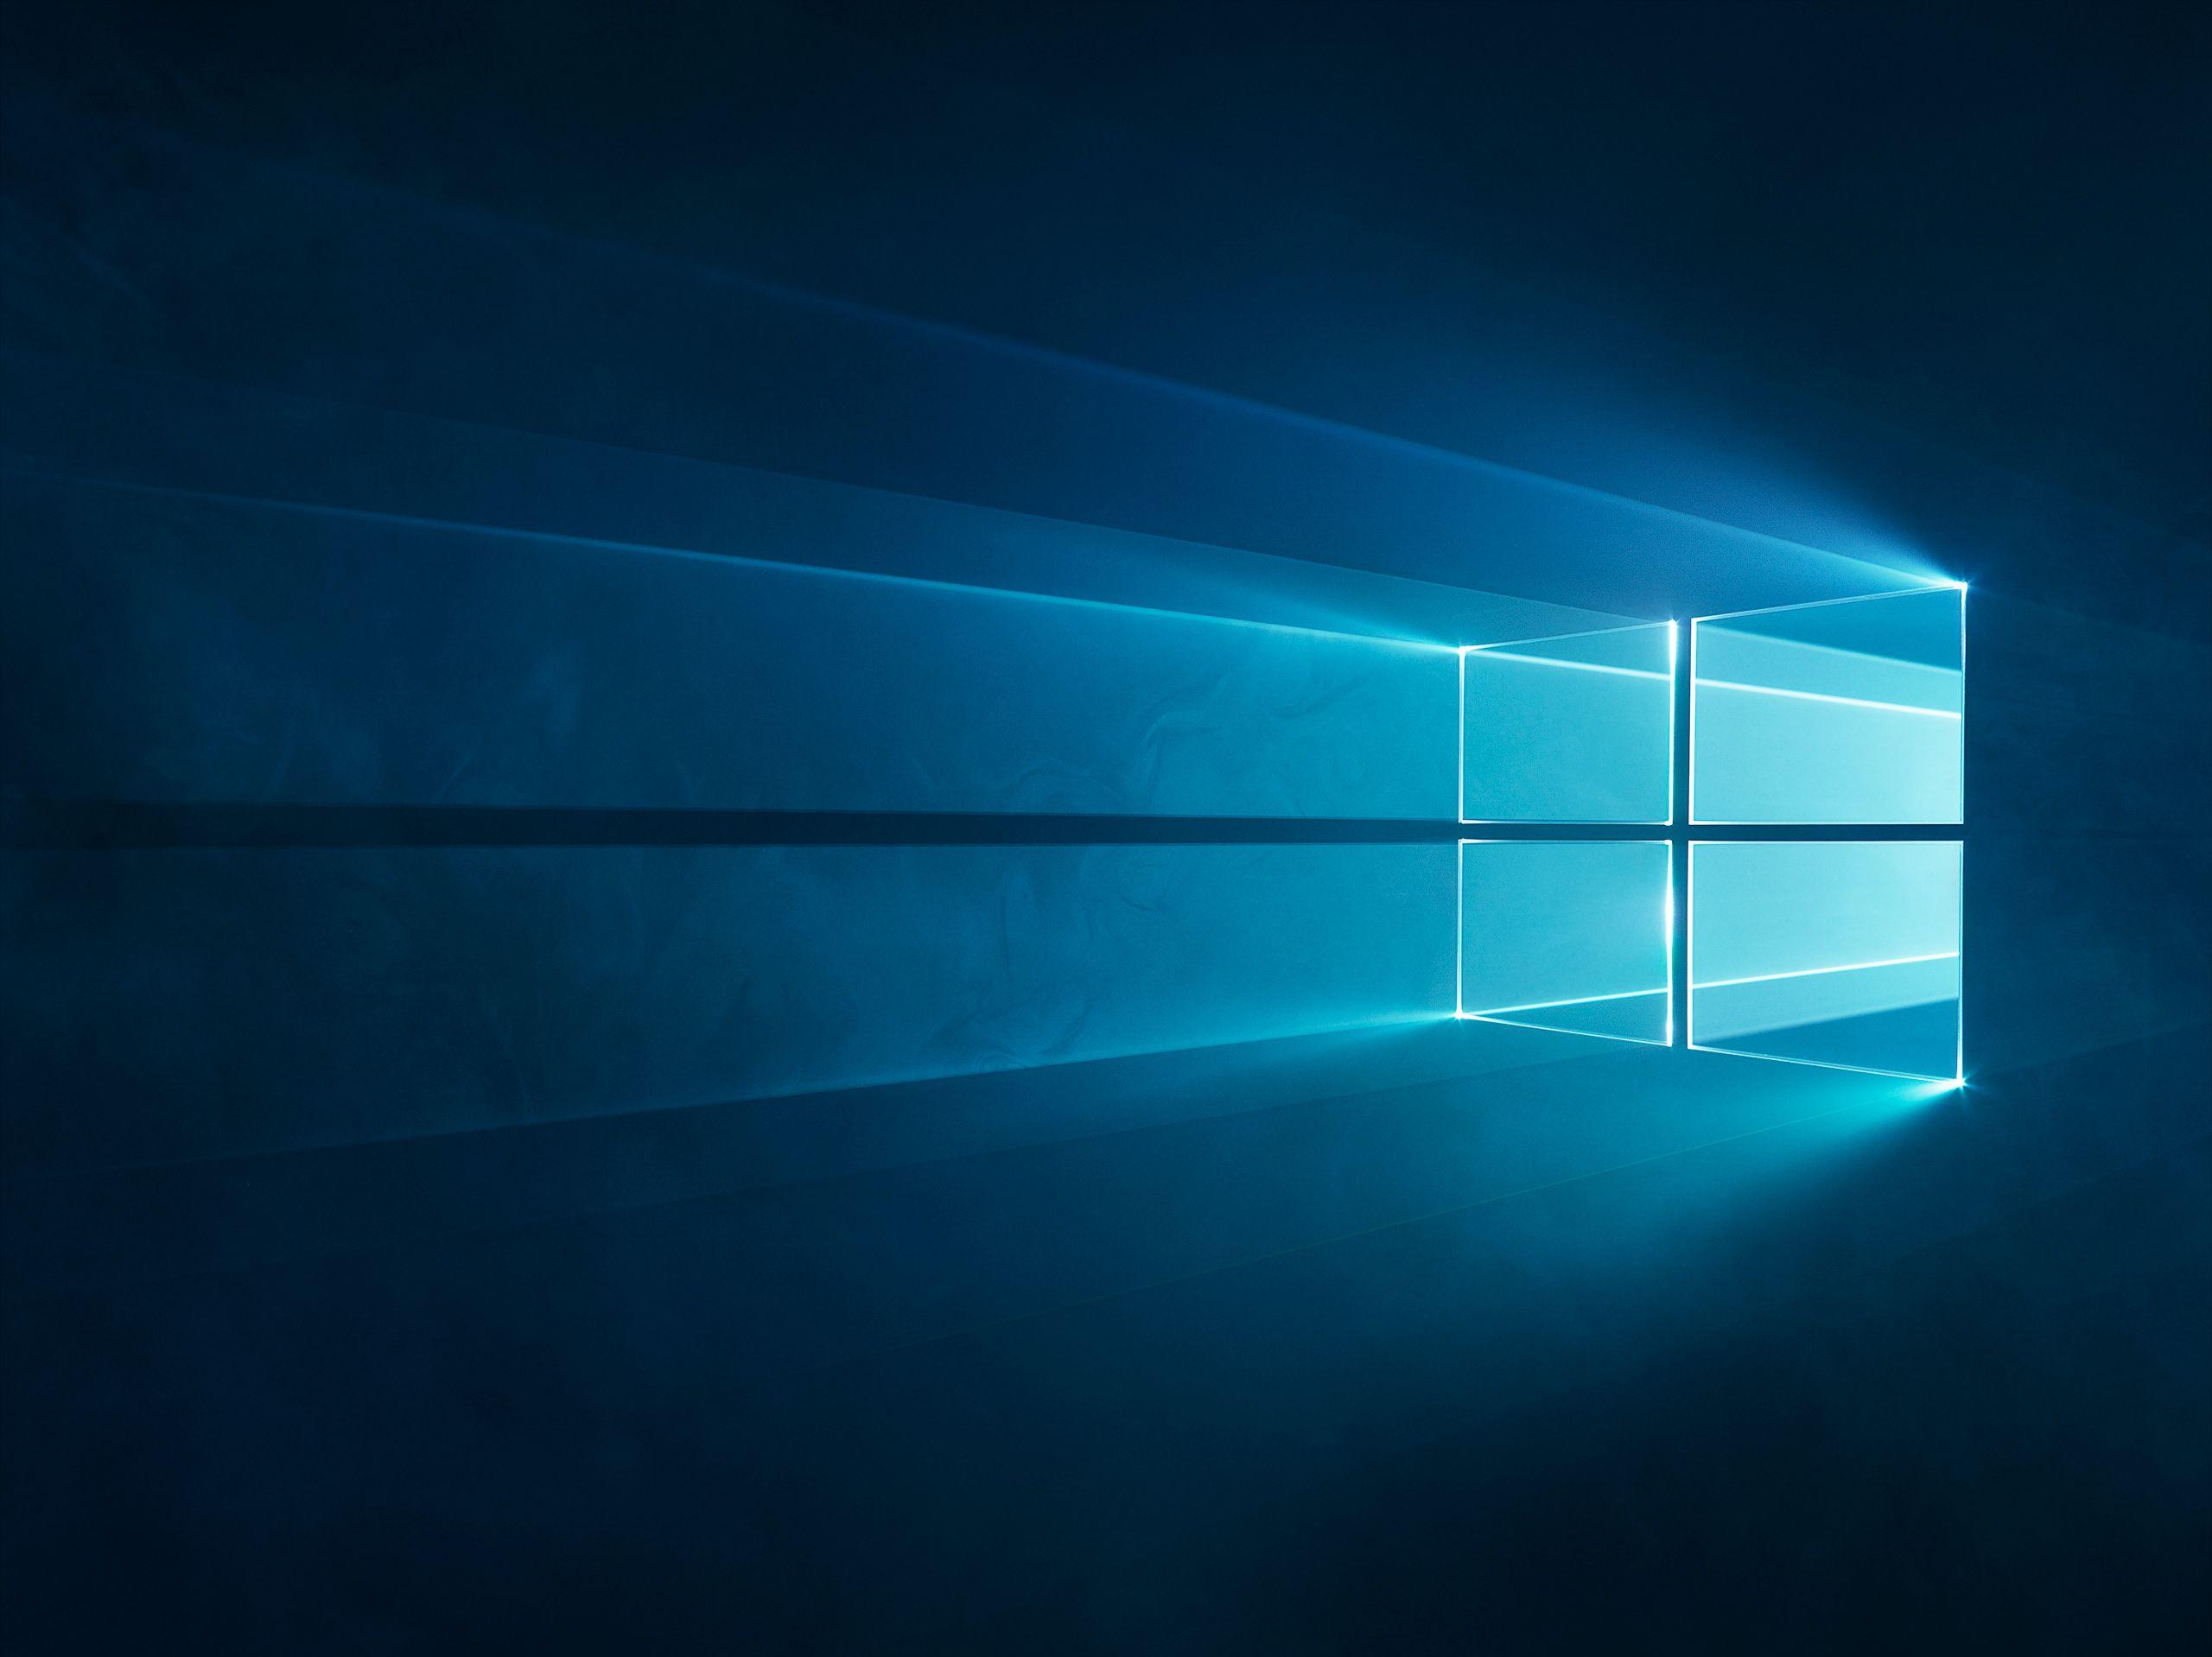 Original Windows Logo - Wallpaper Windows 10, Windows logo, Blue, HD, Technology, #10966